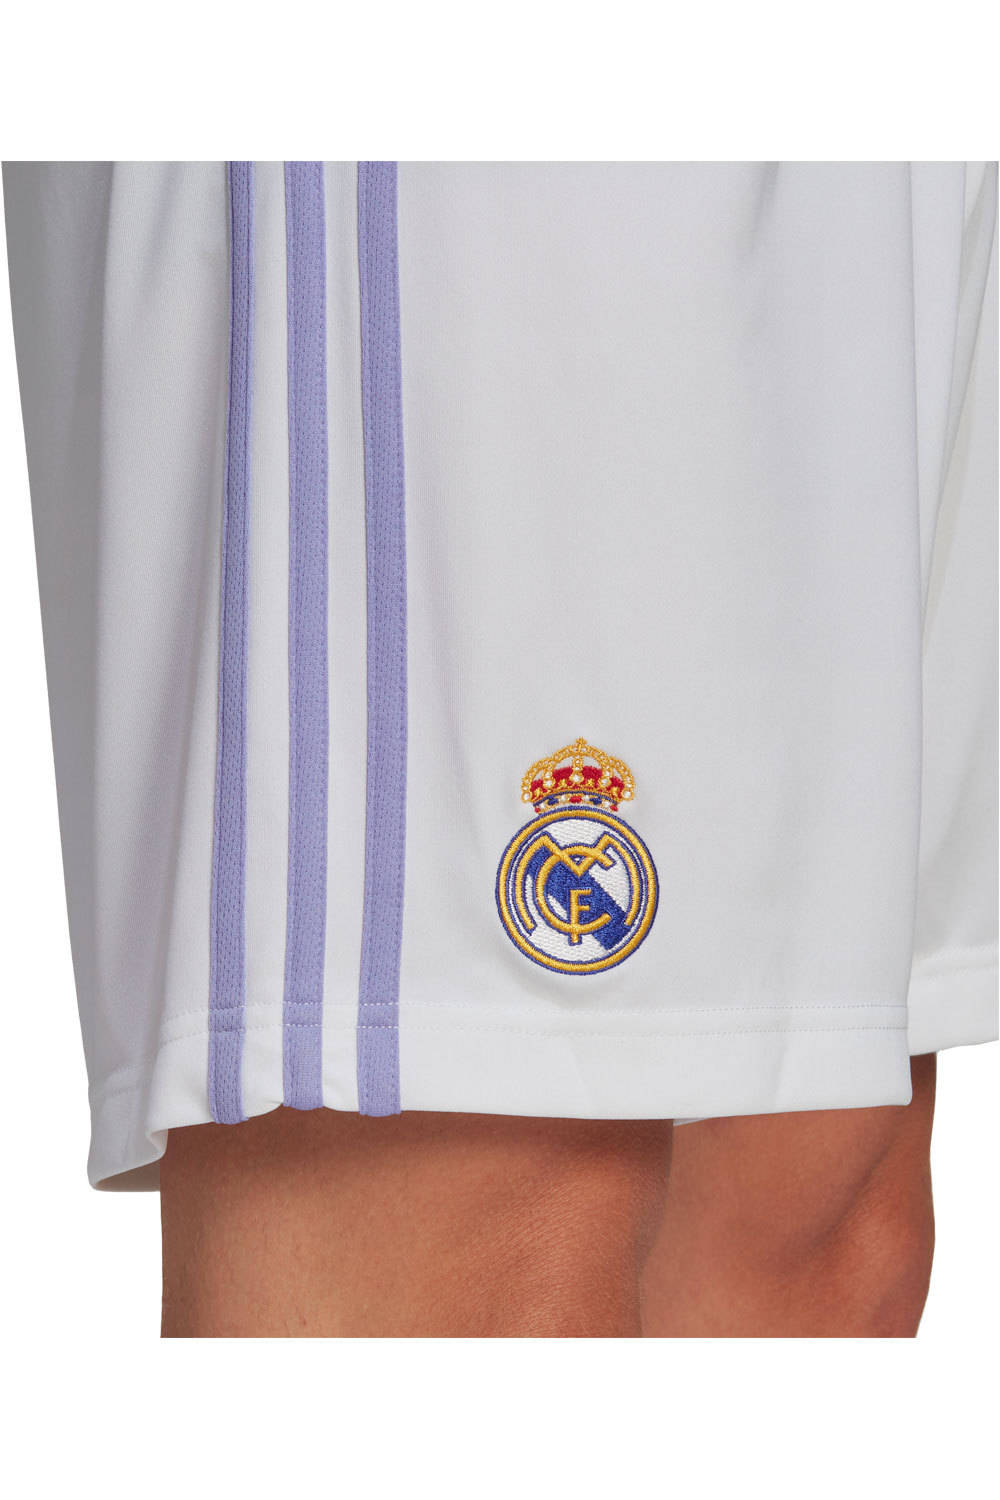 adidas pantalones fútbol oficiales Real Madrid 03